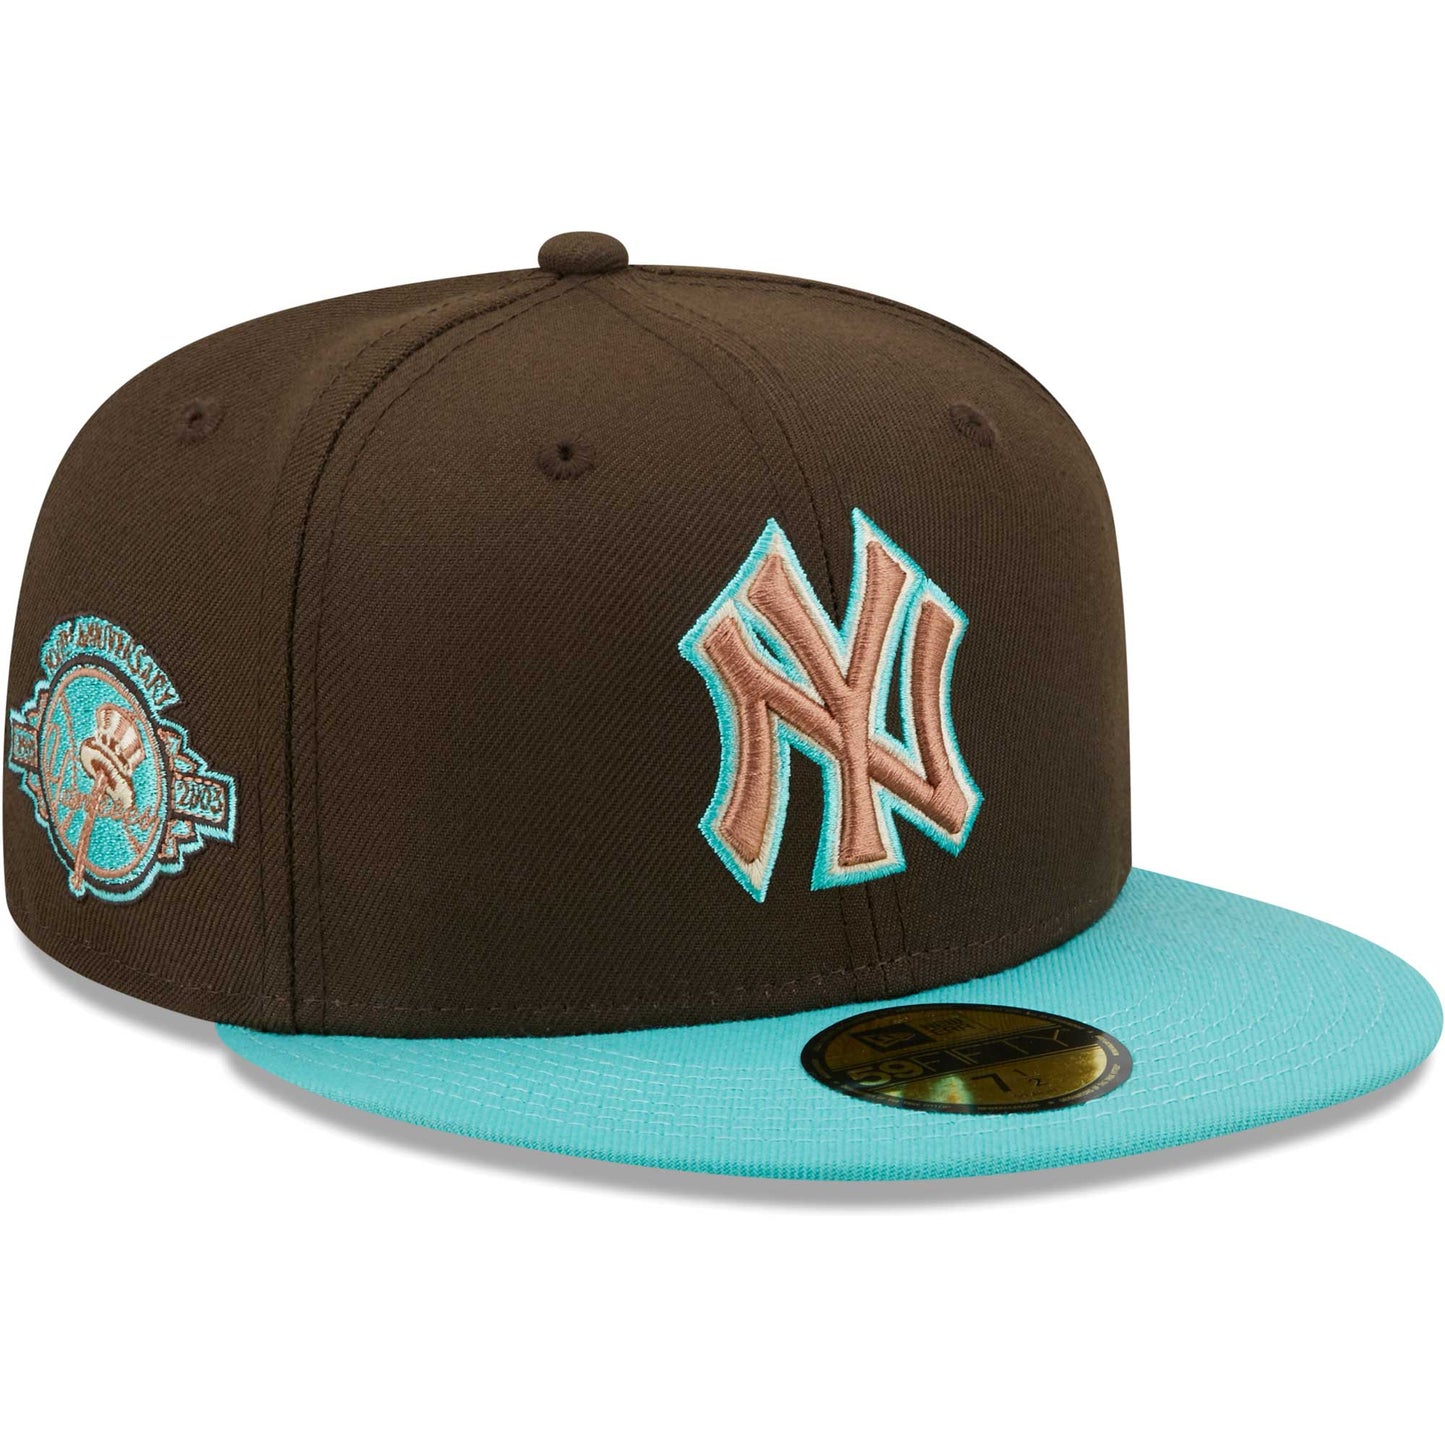 New York Yankees New Era Walnut Mint 59FIFTY Fitted Hat - Brown/Mint